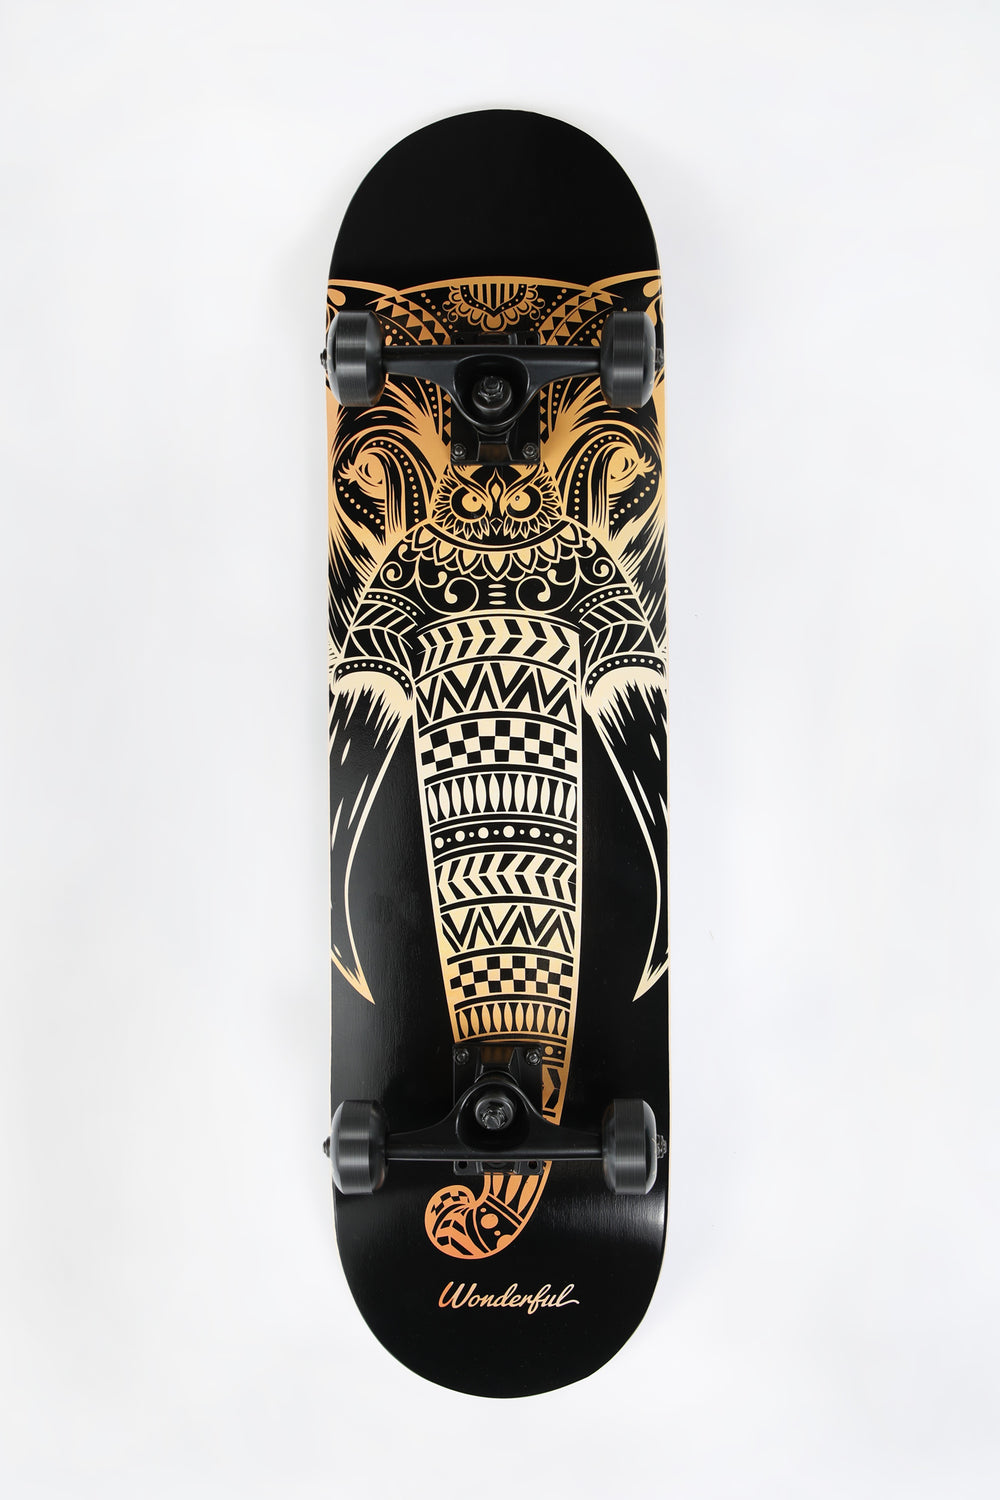 Wonderful Gold Elephant Skateboard 8